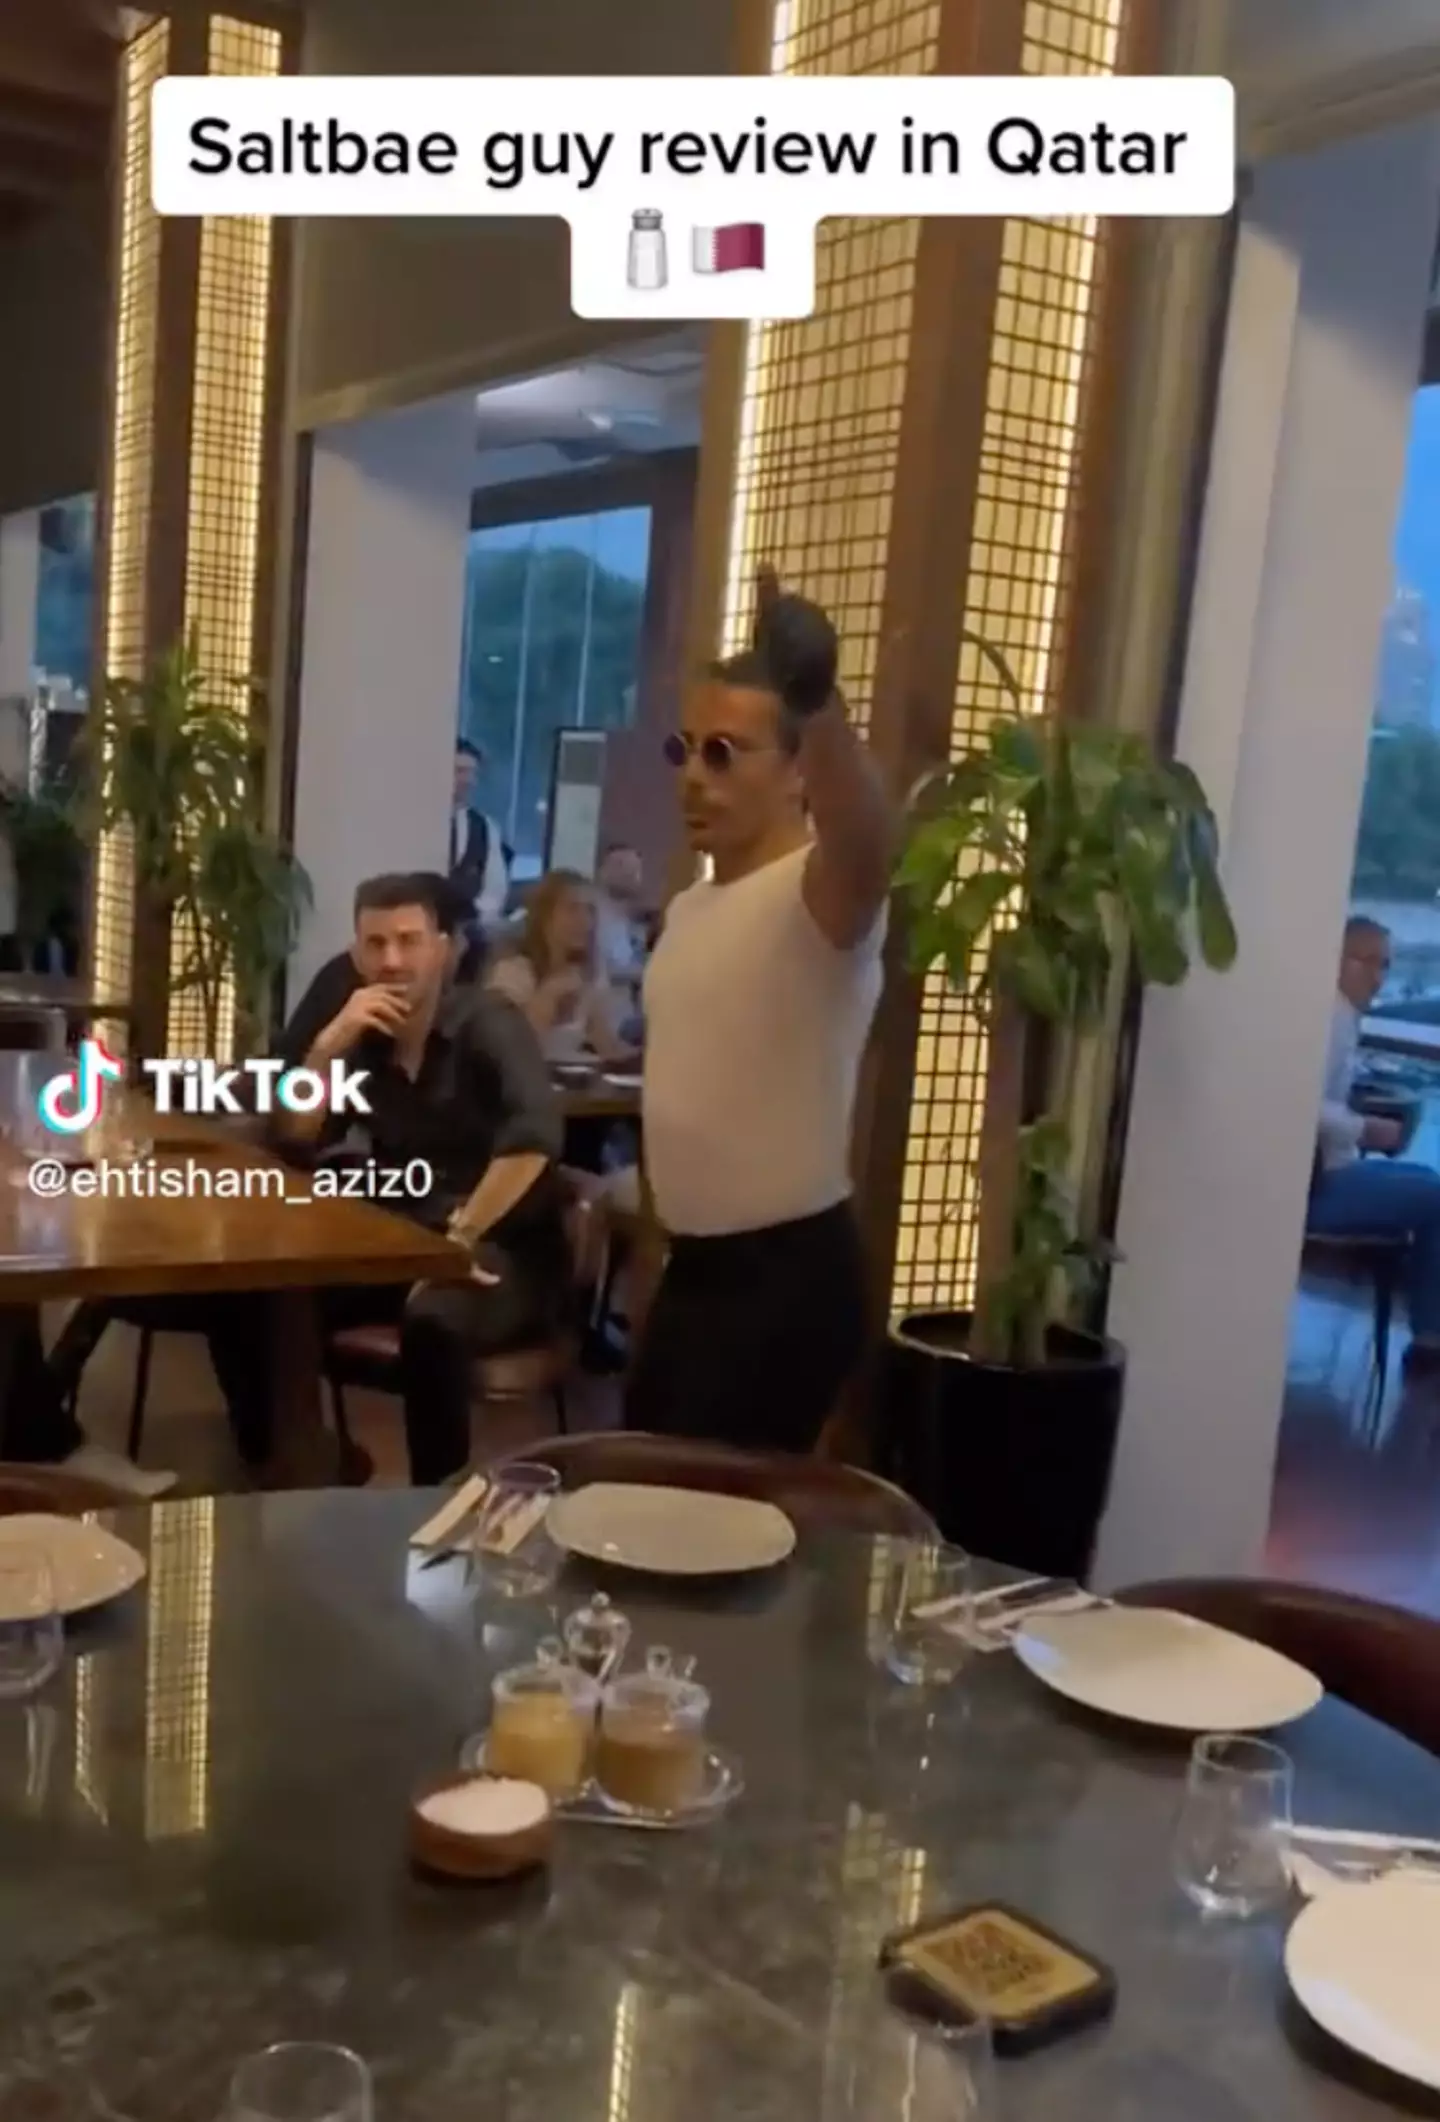 The TikToker went to Salt Bae's restaurant in Qatar.